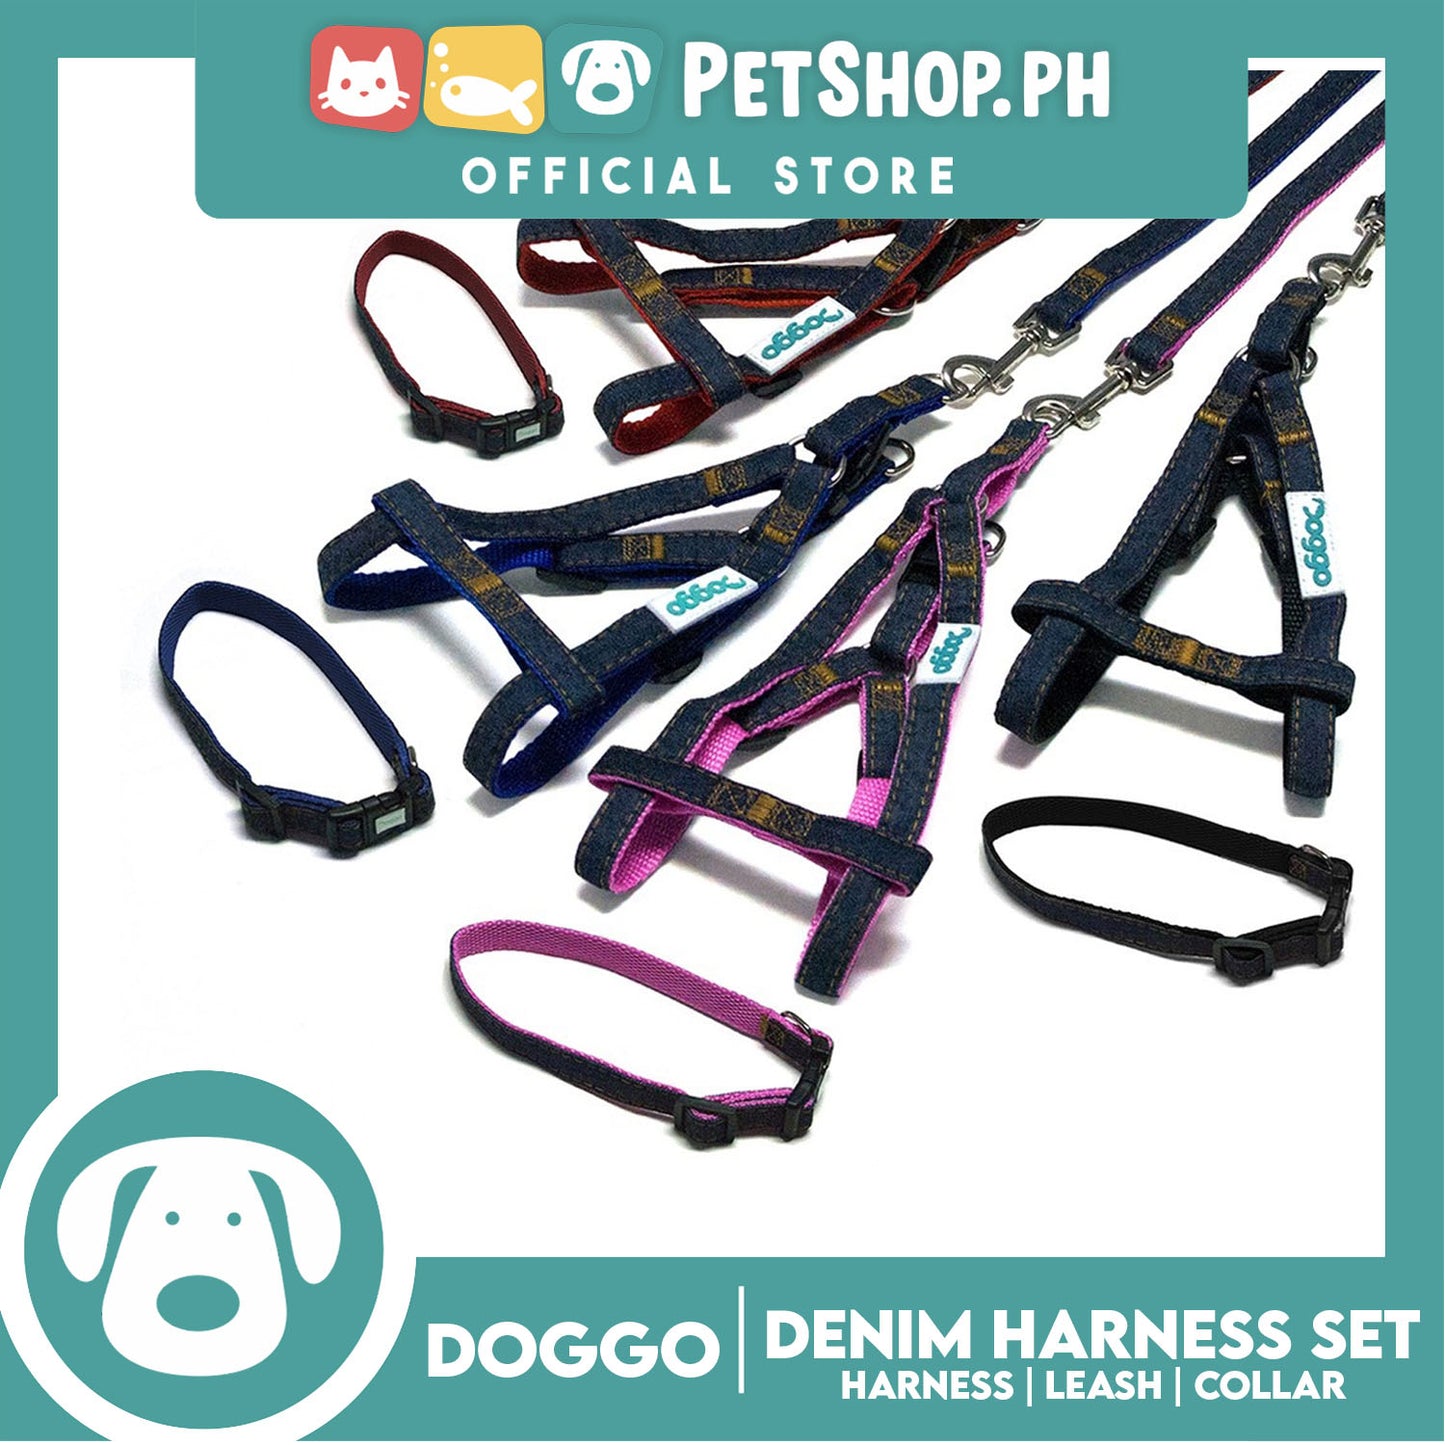 Doggo Strong Harness Set Denim Design Small (Black) Harness, Leash and Collar for Your Dog